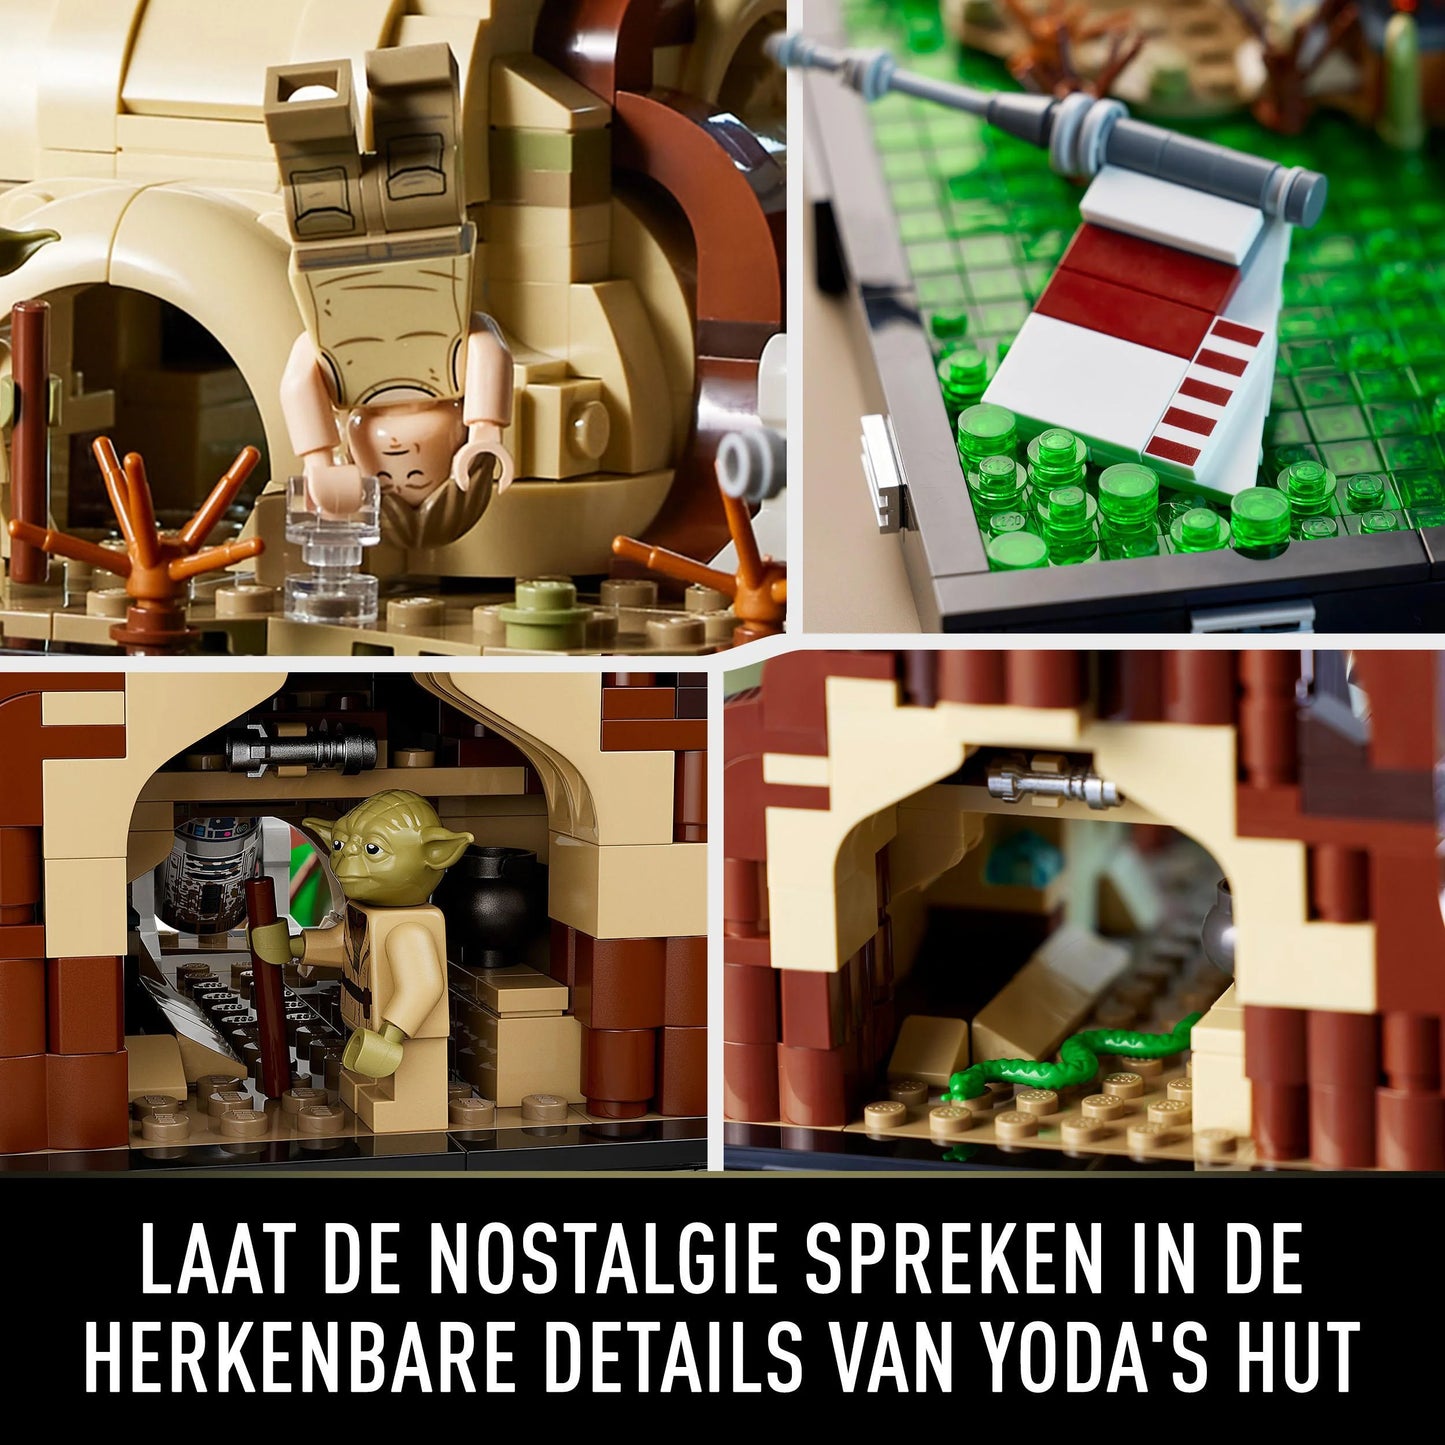 Jedi Training on Dagobah Diorama - LEGO Star Wars